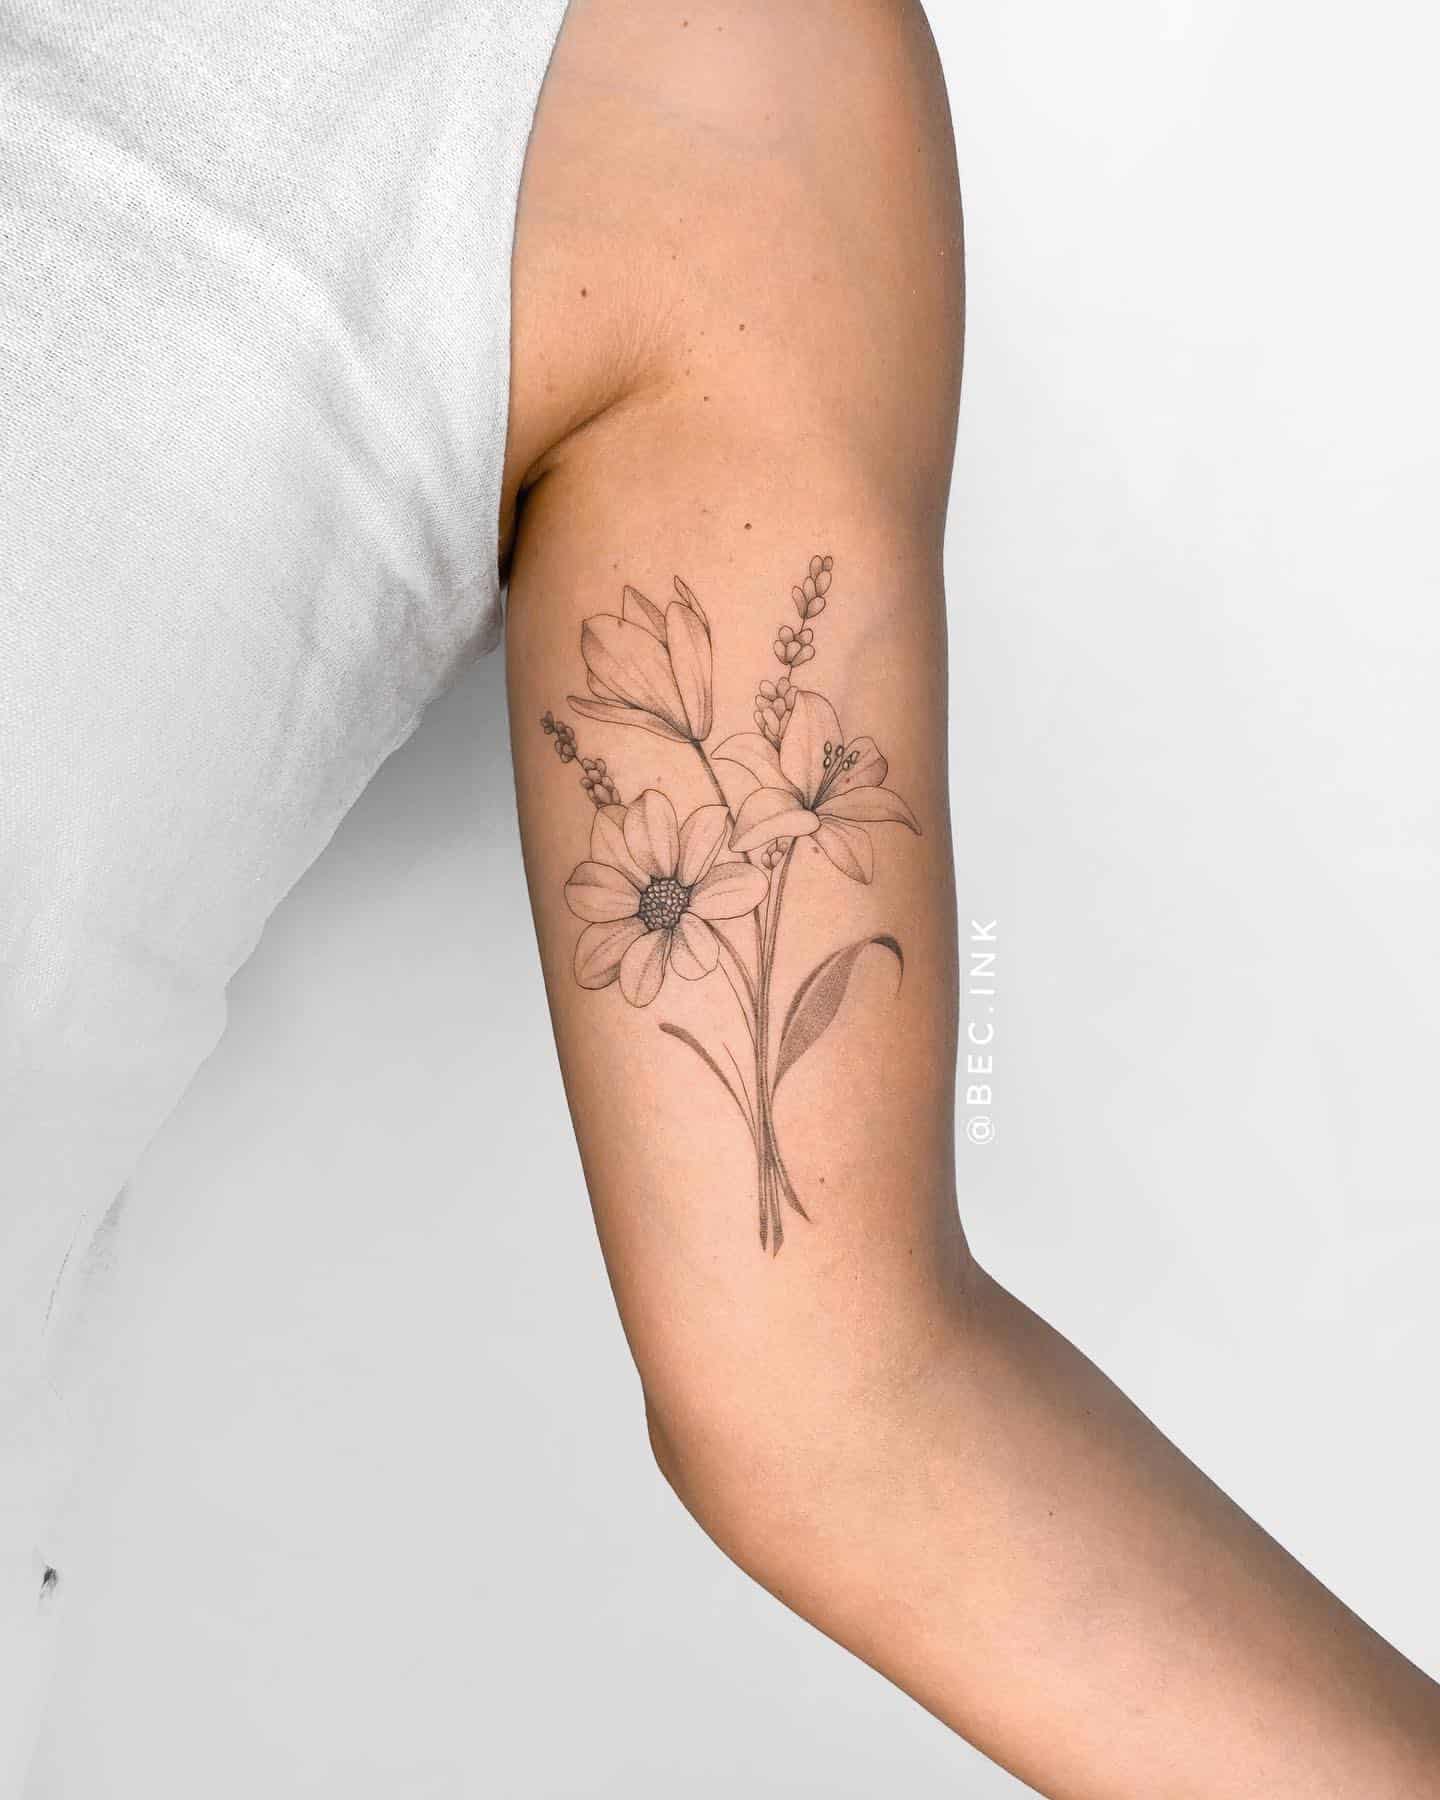 Black and Grey Spot Shading Flower Tattoo